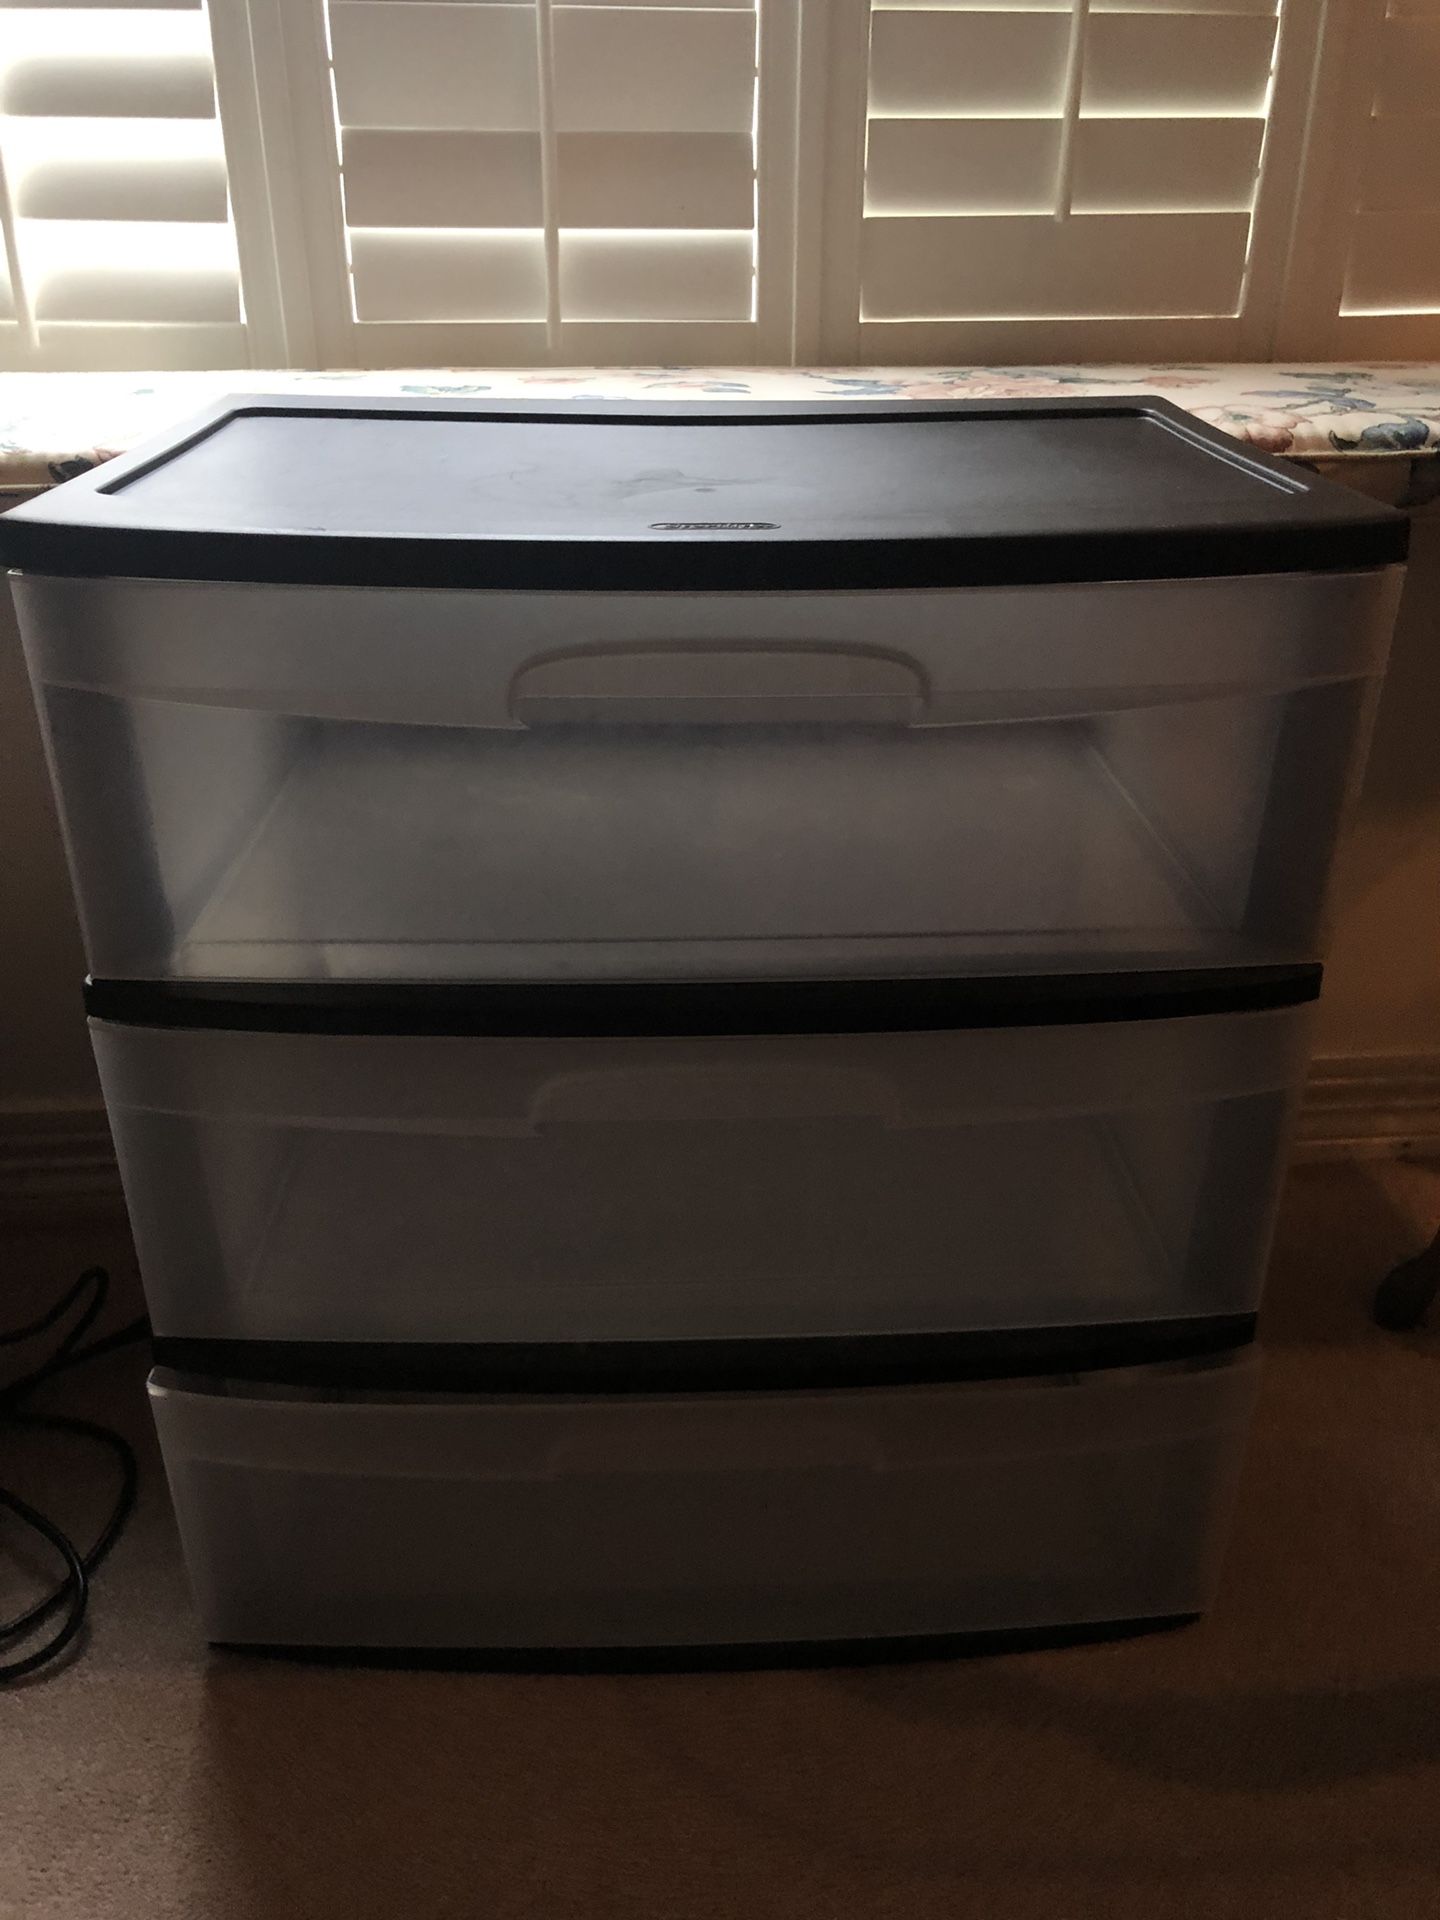 3 drawer plastic organizer